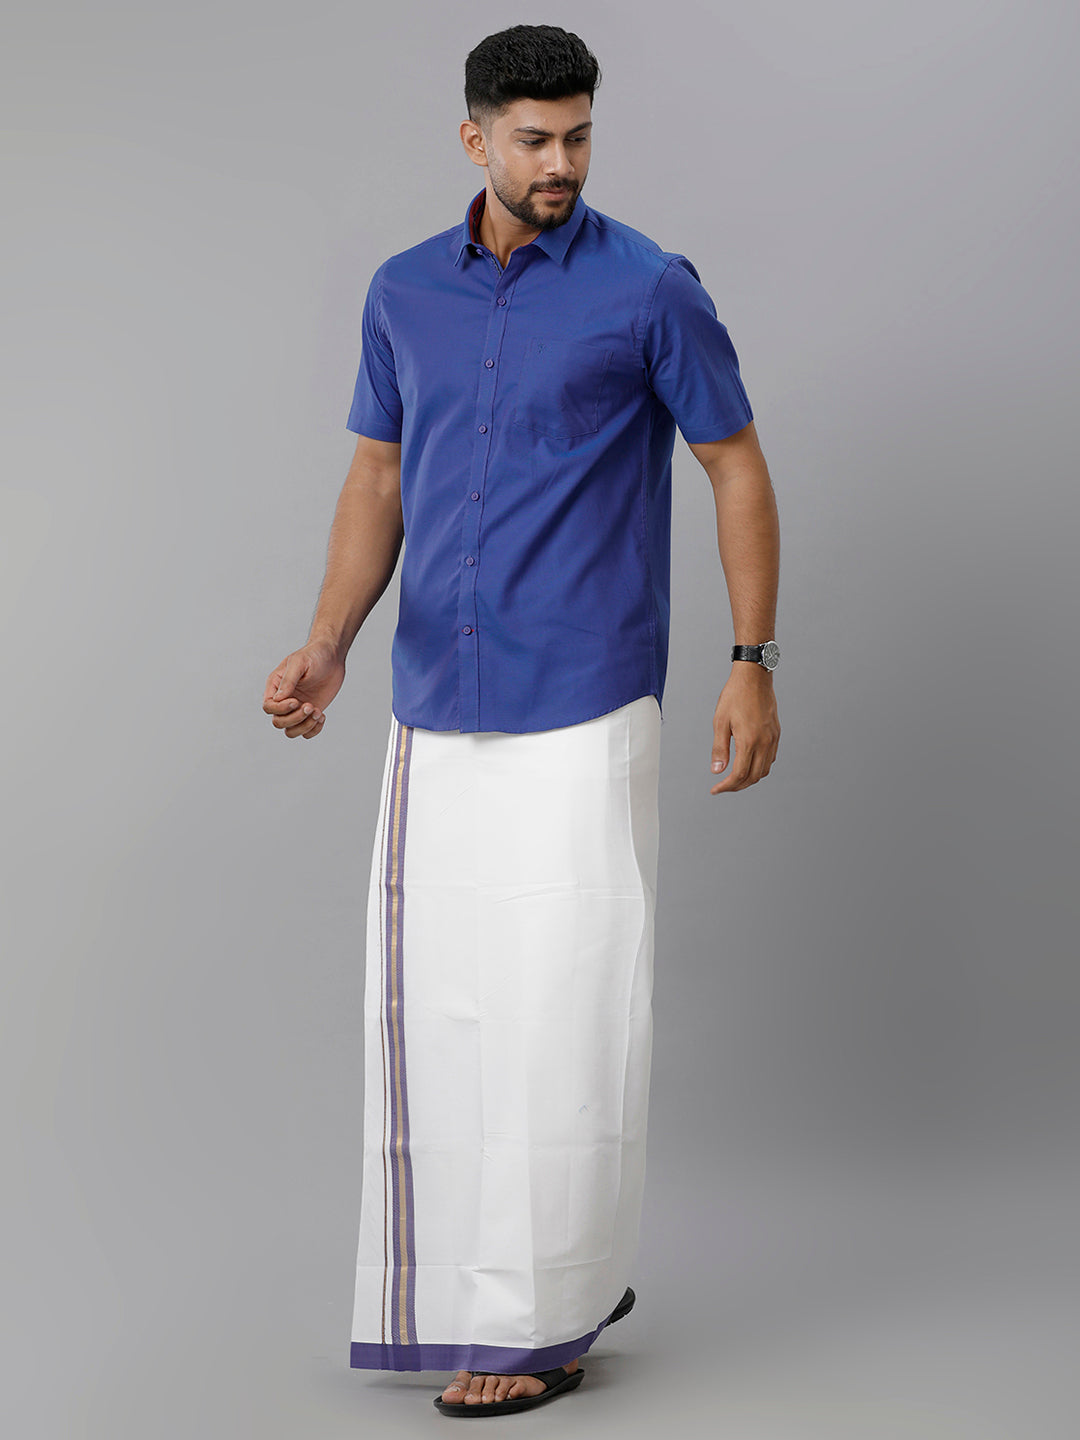 Mens Cotton Matching Border Dhoti & Half Sleeves Shirt Blue Set GL17-Sdie view